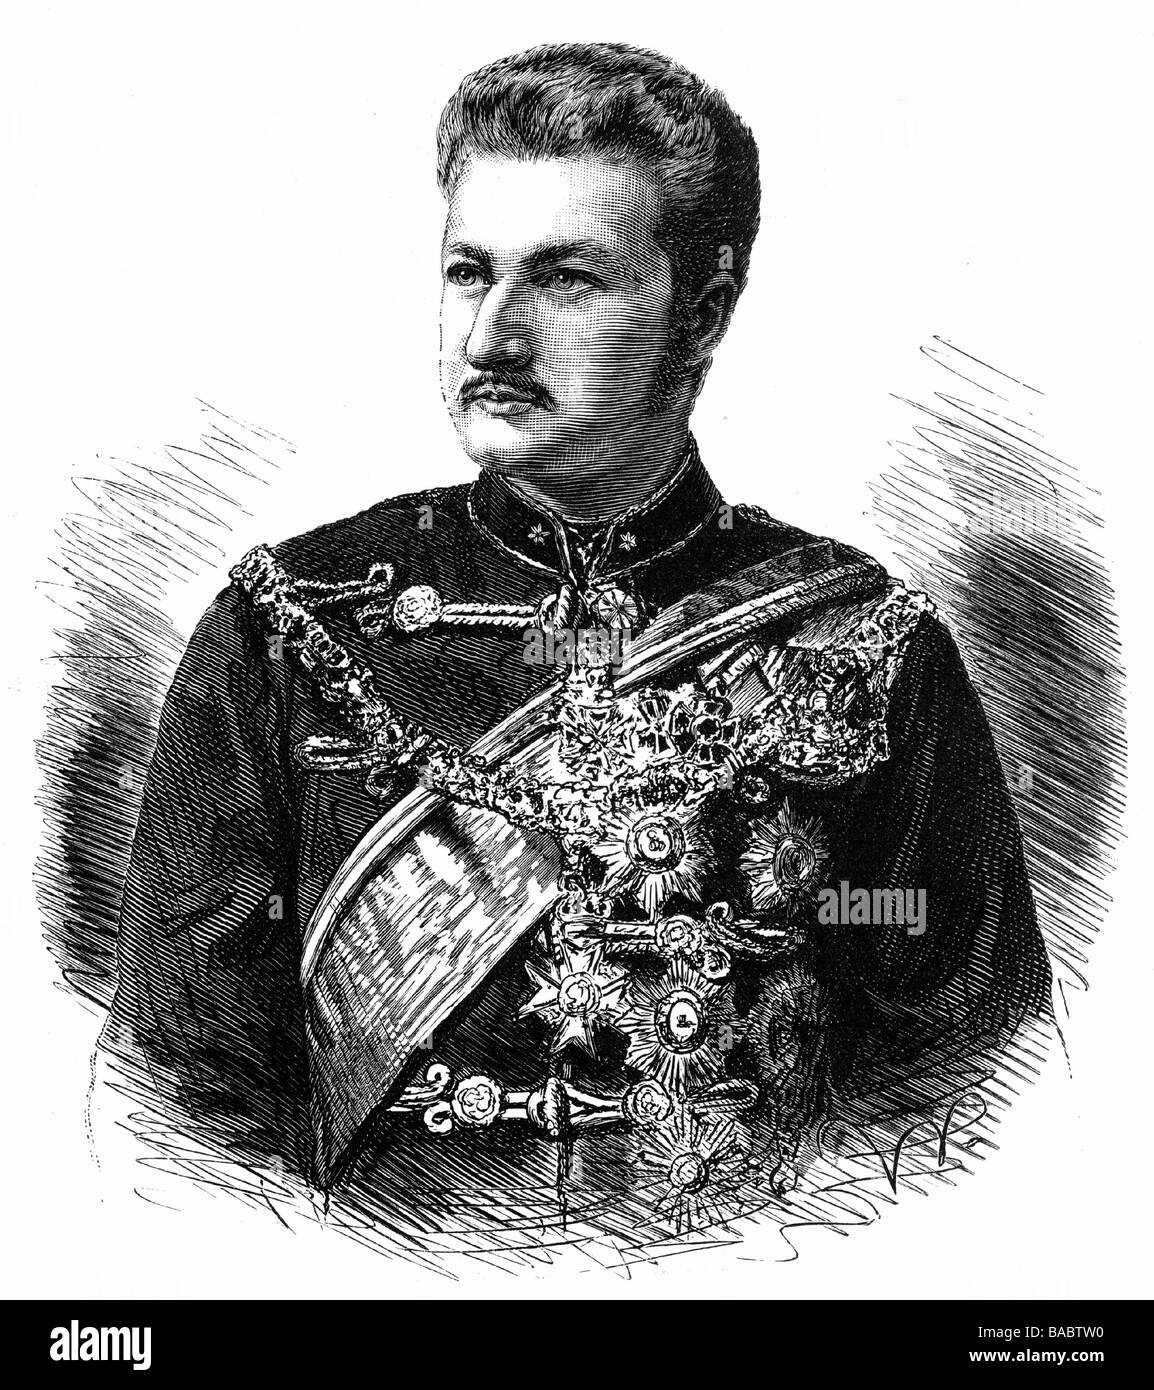 Ferdinand I, 26.2.1861 - 10.9.1948, Prince of Bulgaria since 29.7.1887, King 7.7.1908 - 3.10.1918, portrait, wood engraving, 1887, Stock Photo